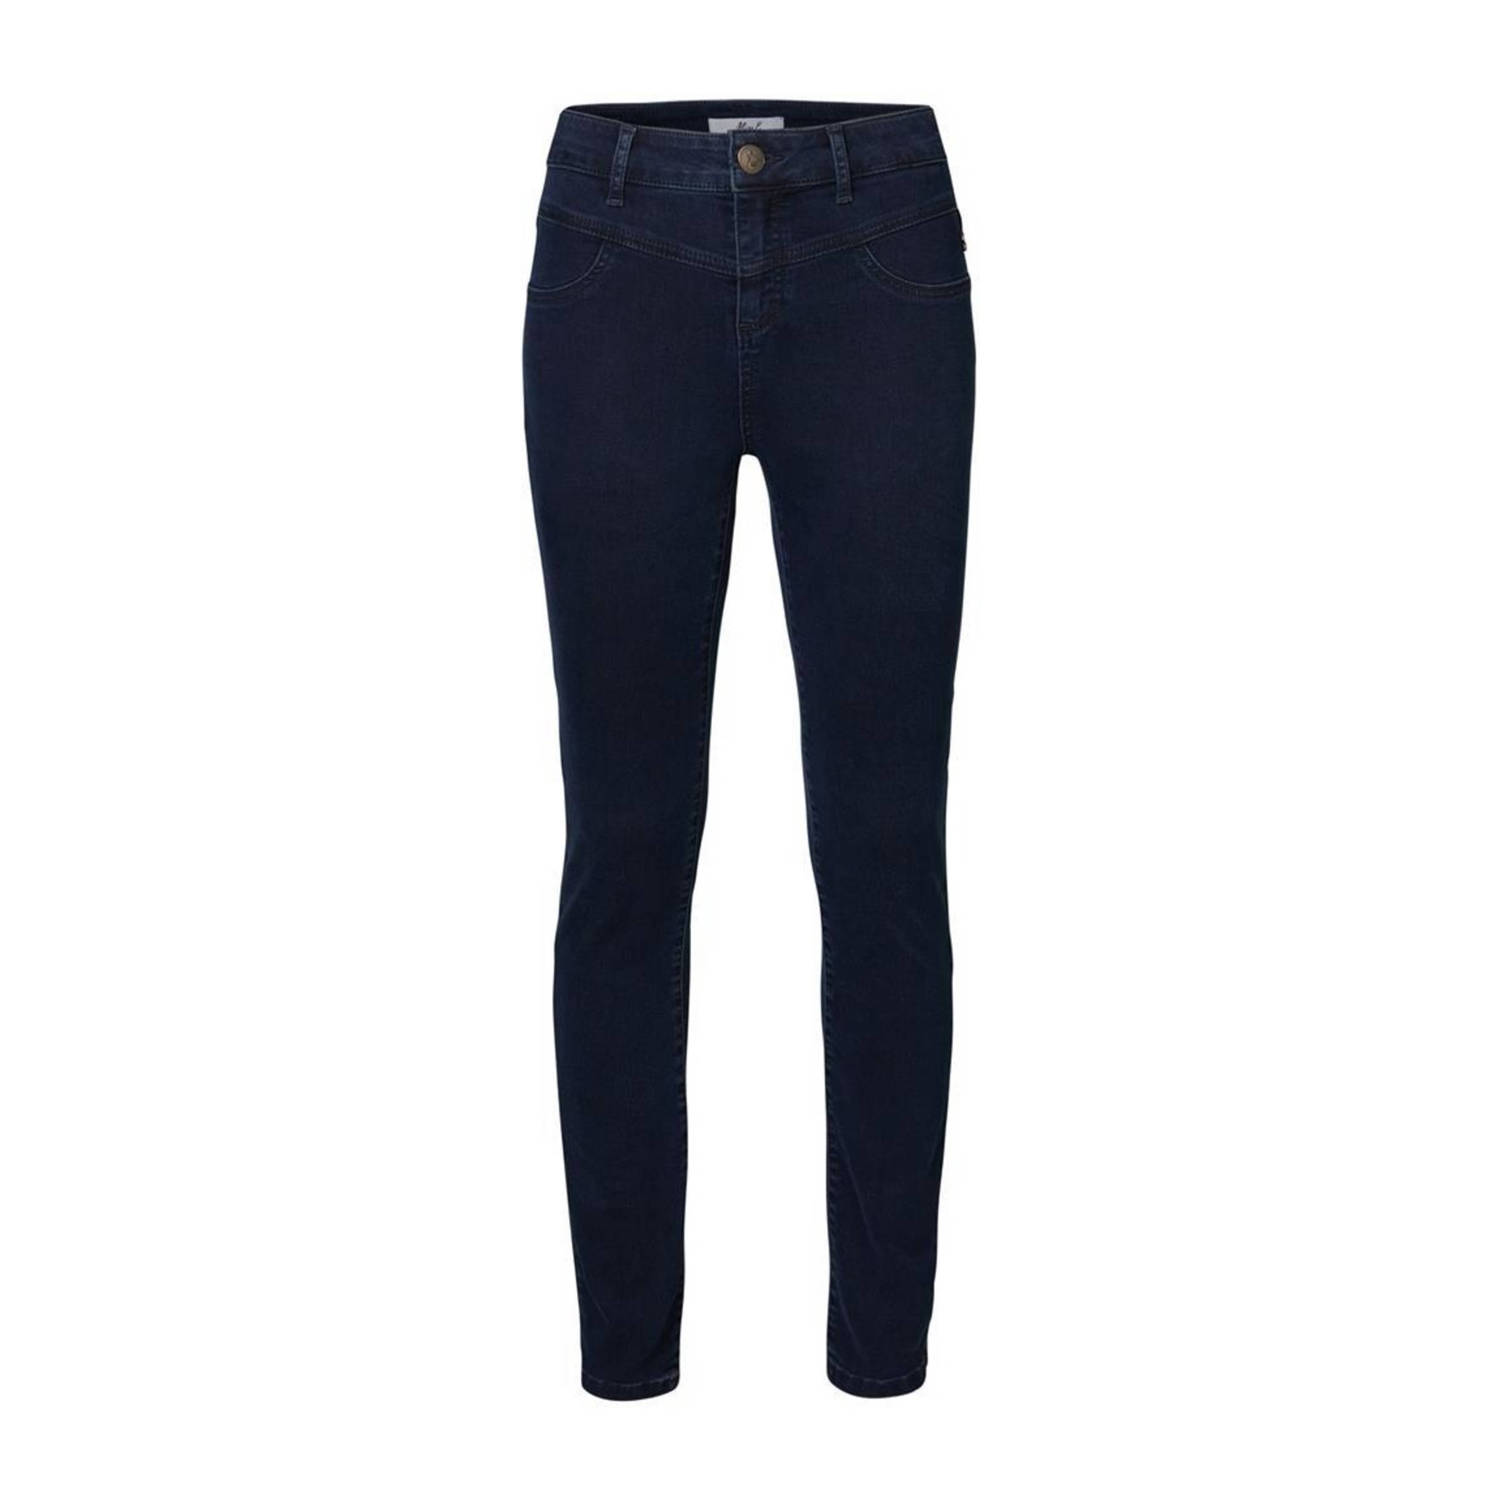 Miss Etam Regulier high waist skinny jeans Hanna dark blue denim